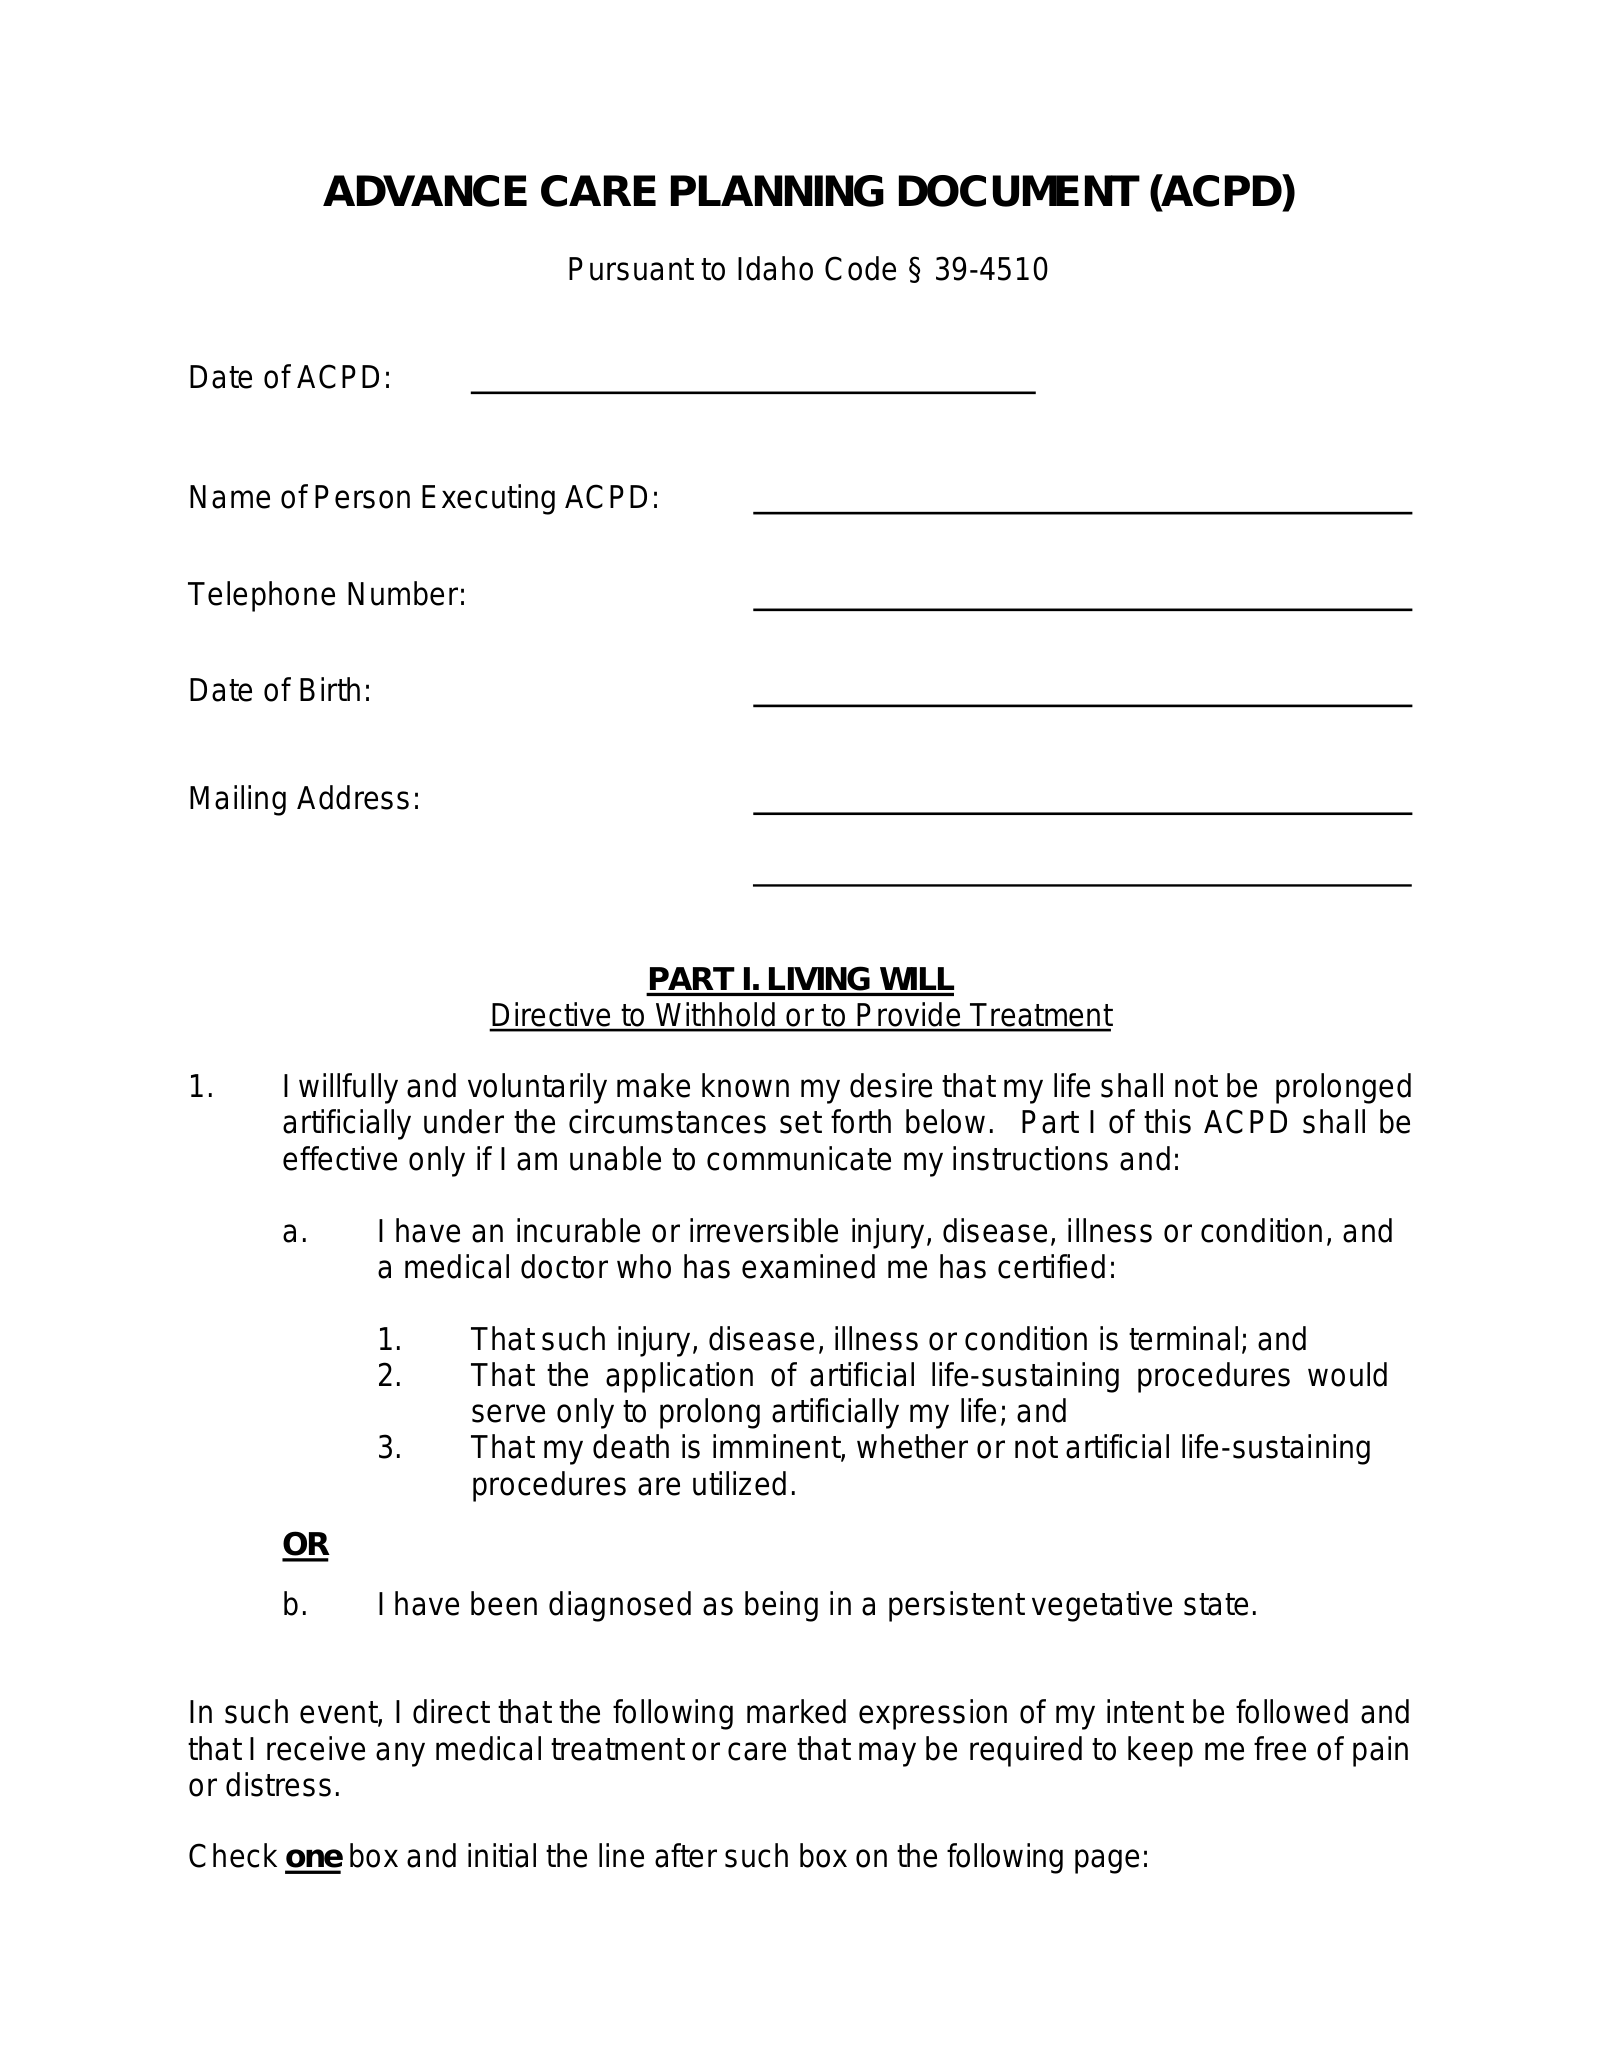 Idaho Advance Directive Form